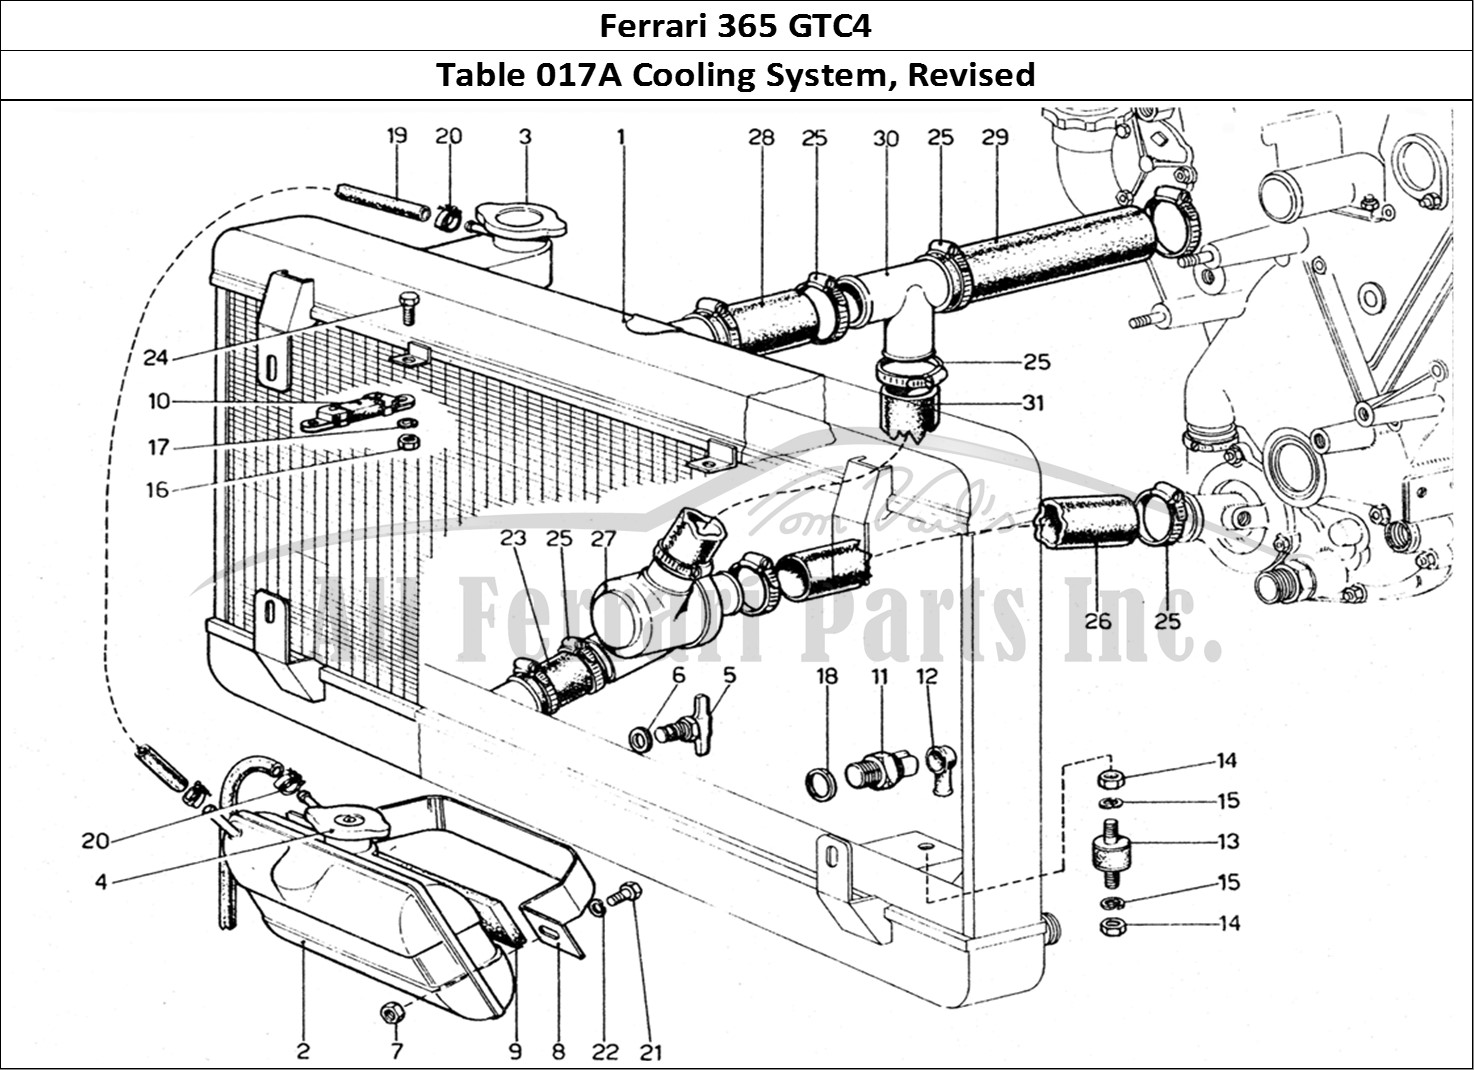 Ferrari Parts Ferrari 365 GTC4 (Mechanical) Page 017 Water circuit - Revision